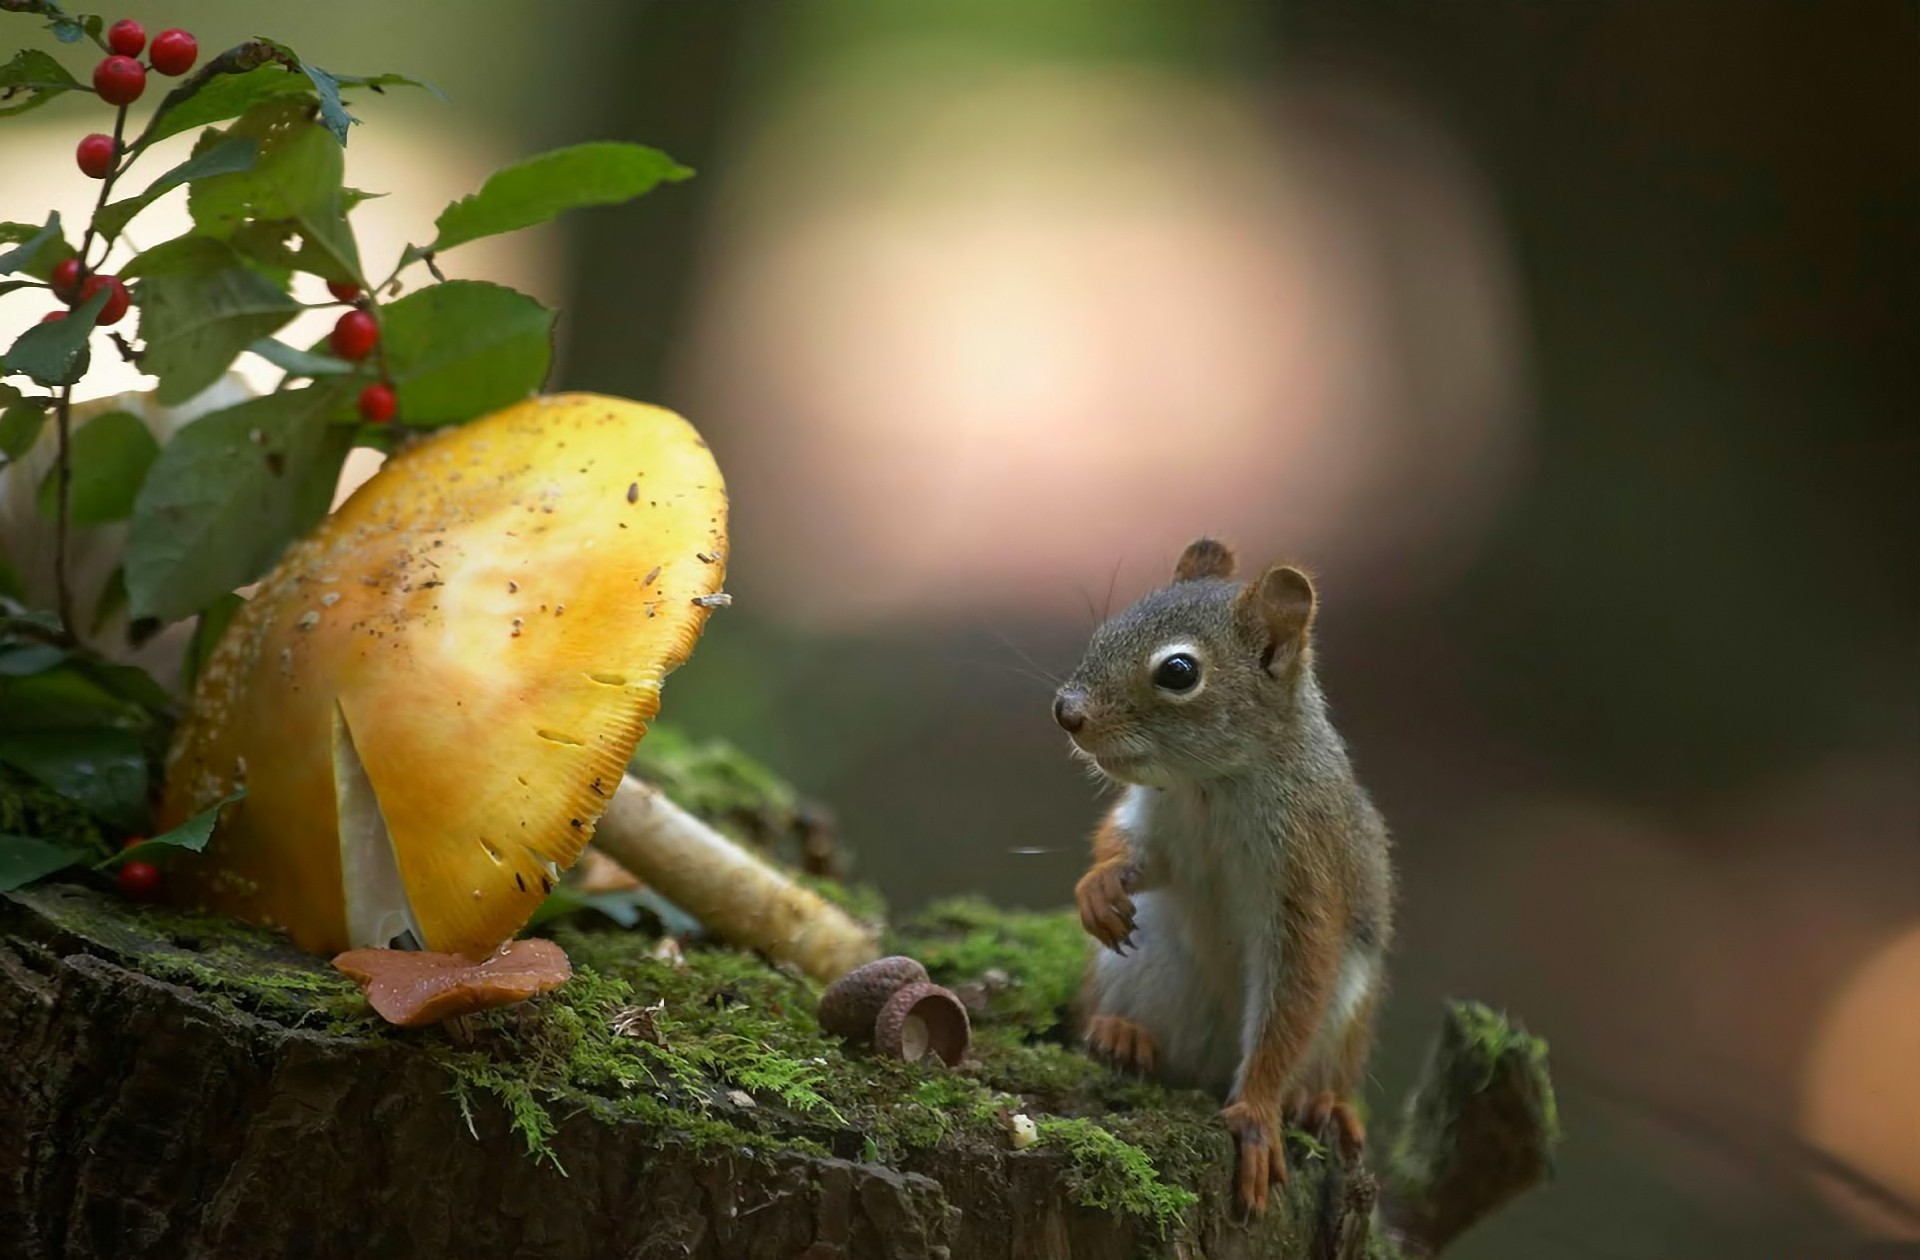 A squirrel ate a nut